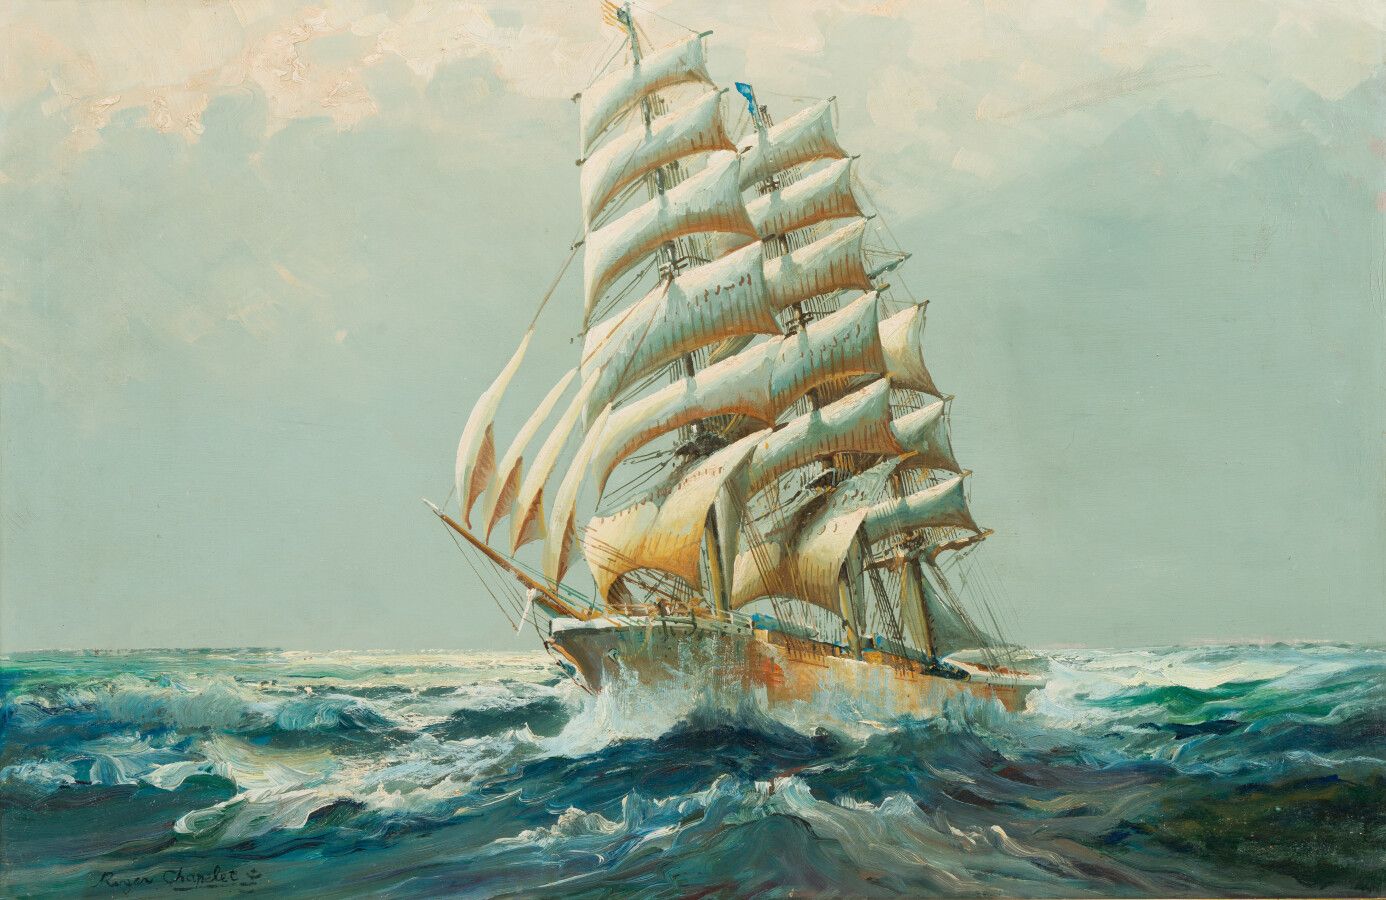 Null 45.罗杰-夏佩勒 (1903-1995)

在北方海面上悬挂美国国旗的三桅船

布面油画，左下方有签名。

61 x 92 cm

(小型修复)